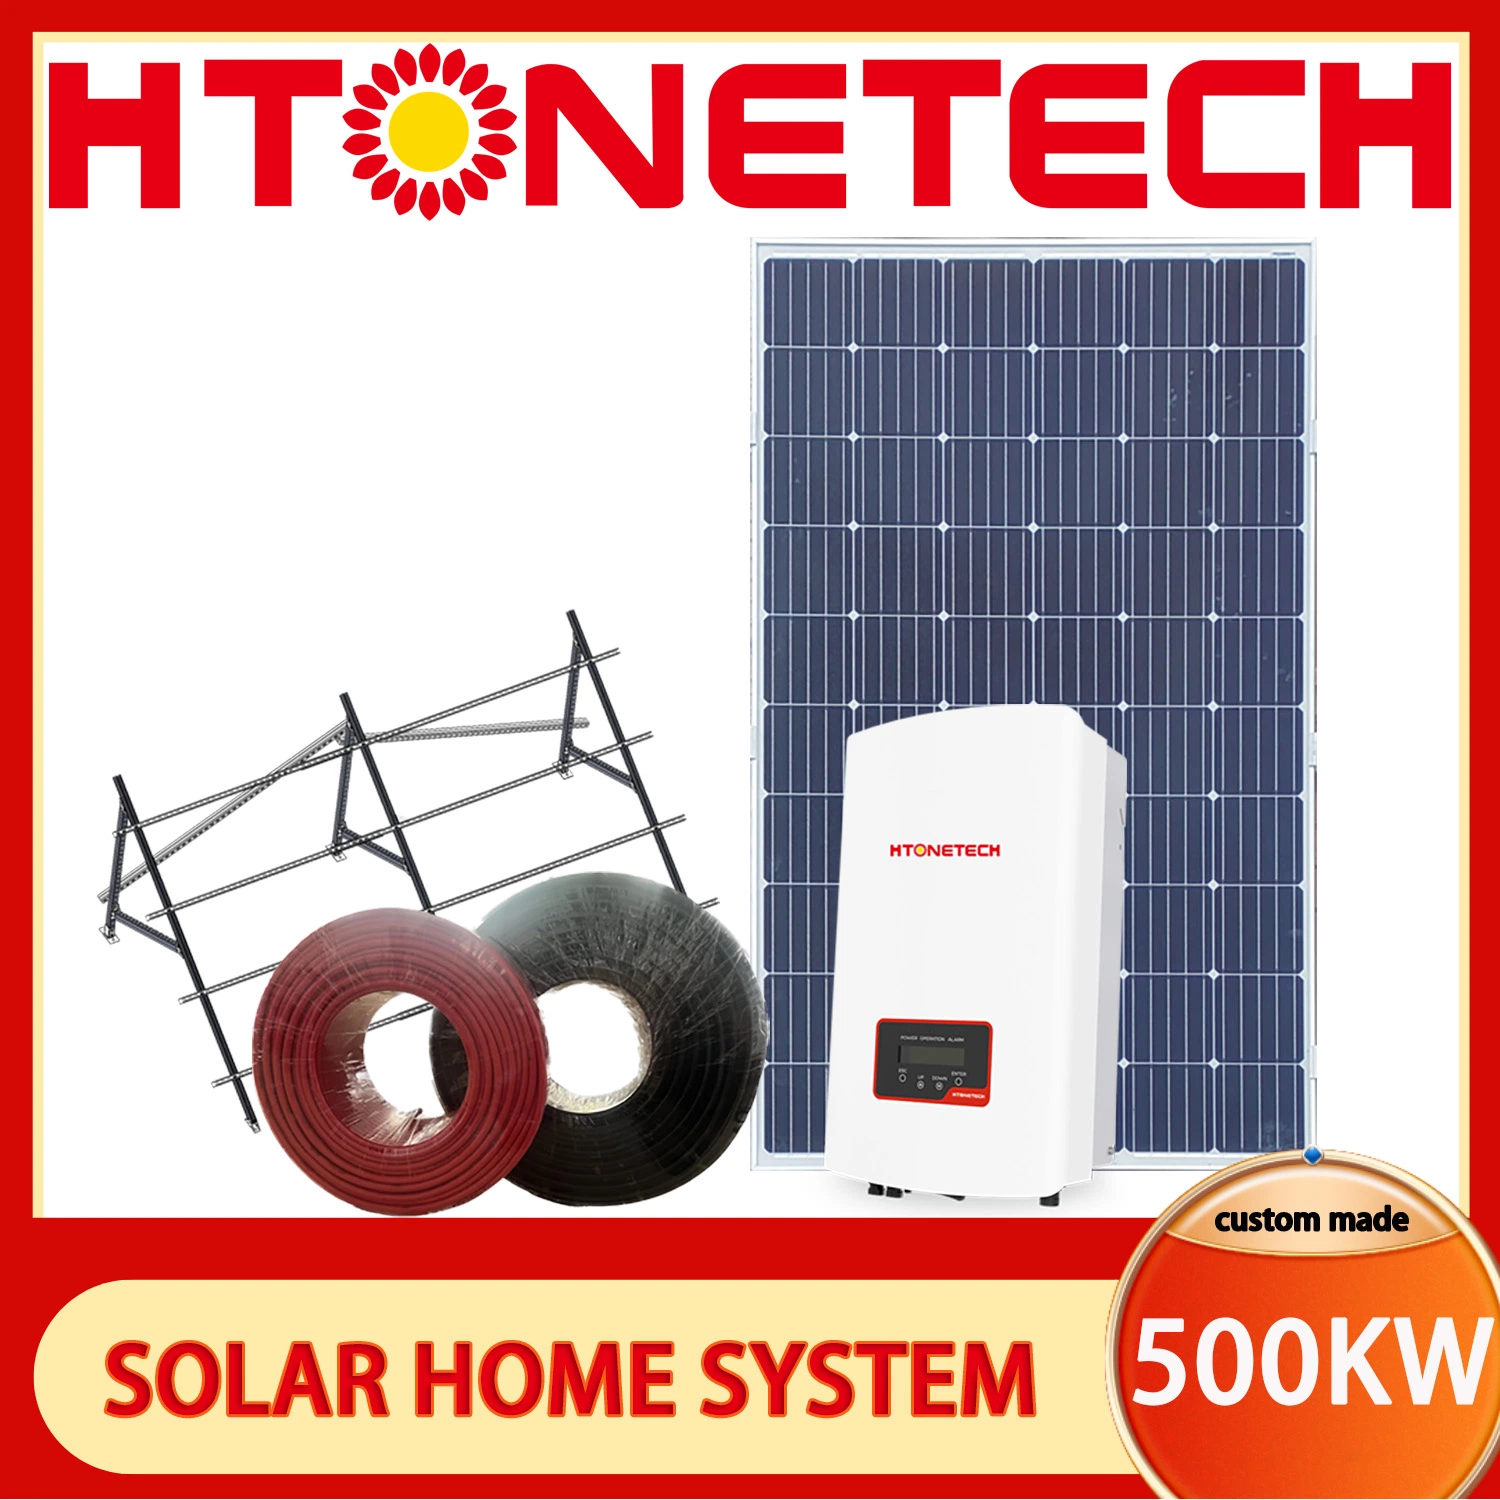 Solar Home System Dachfarm Orchard Energieerzeugung Gerät Photovoltaik 500kW Solar Lighting Outdoor Portable Stromversorgung